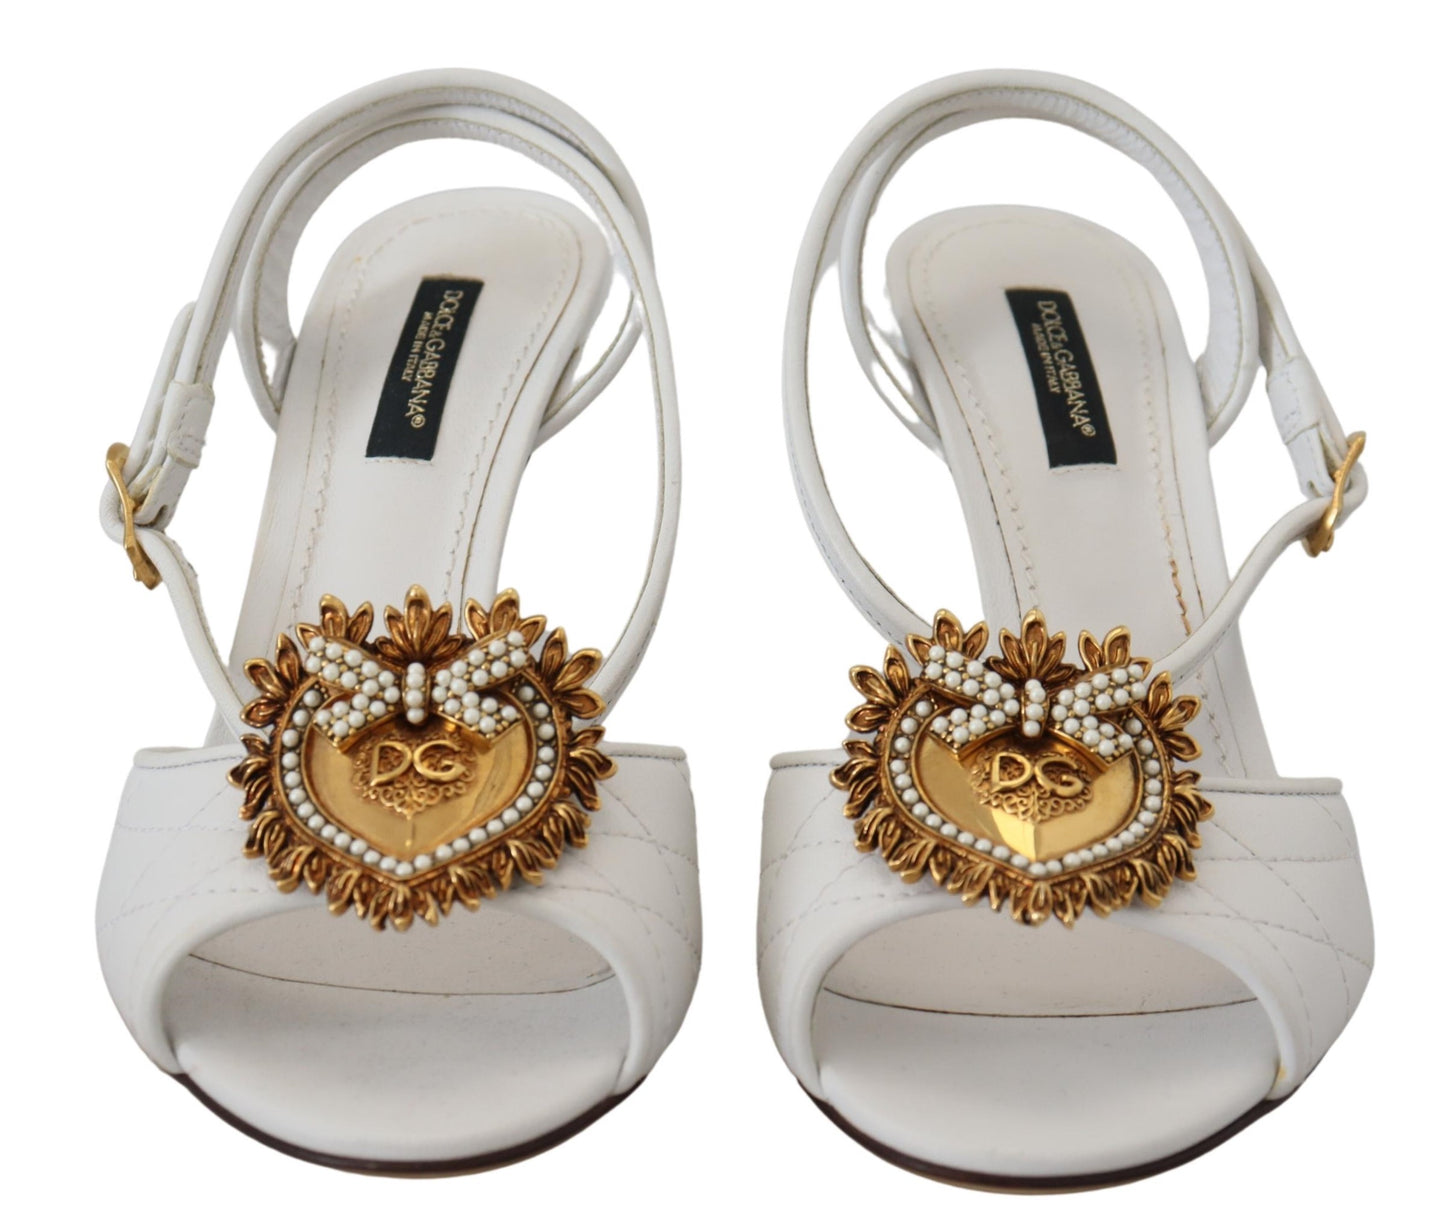 Dolce & Gabbana Devotion Embellished White Leather Stilettos